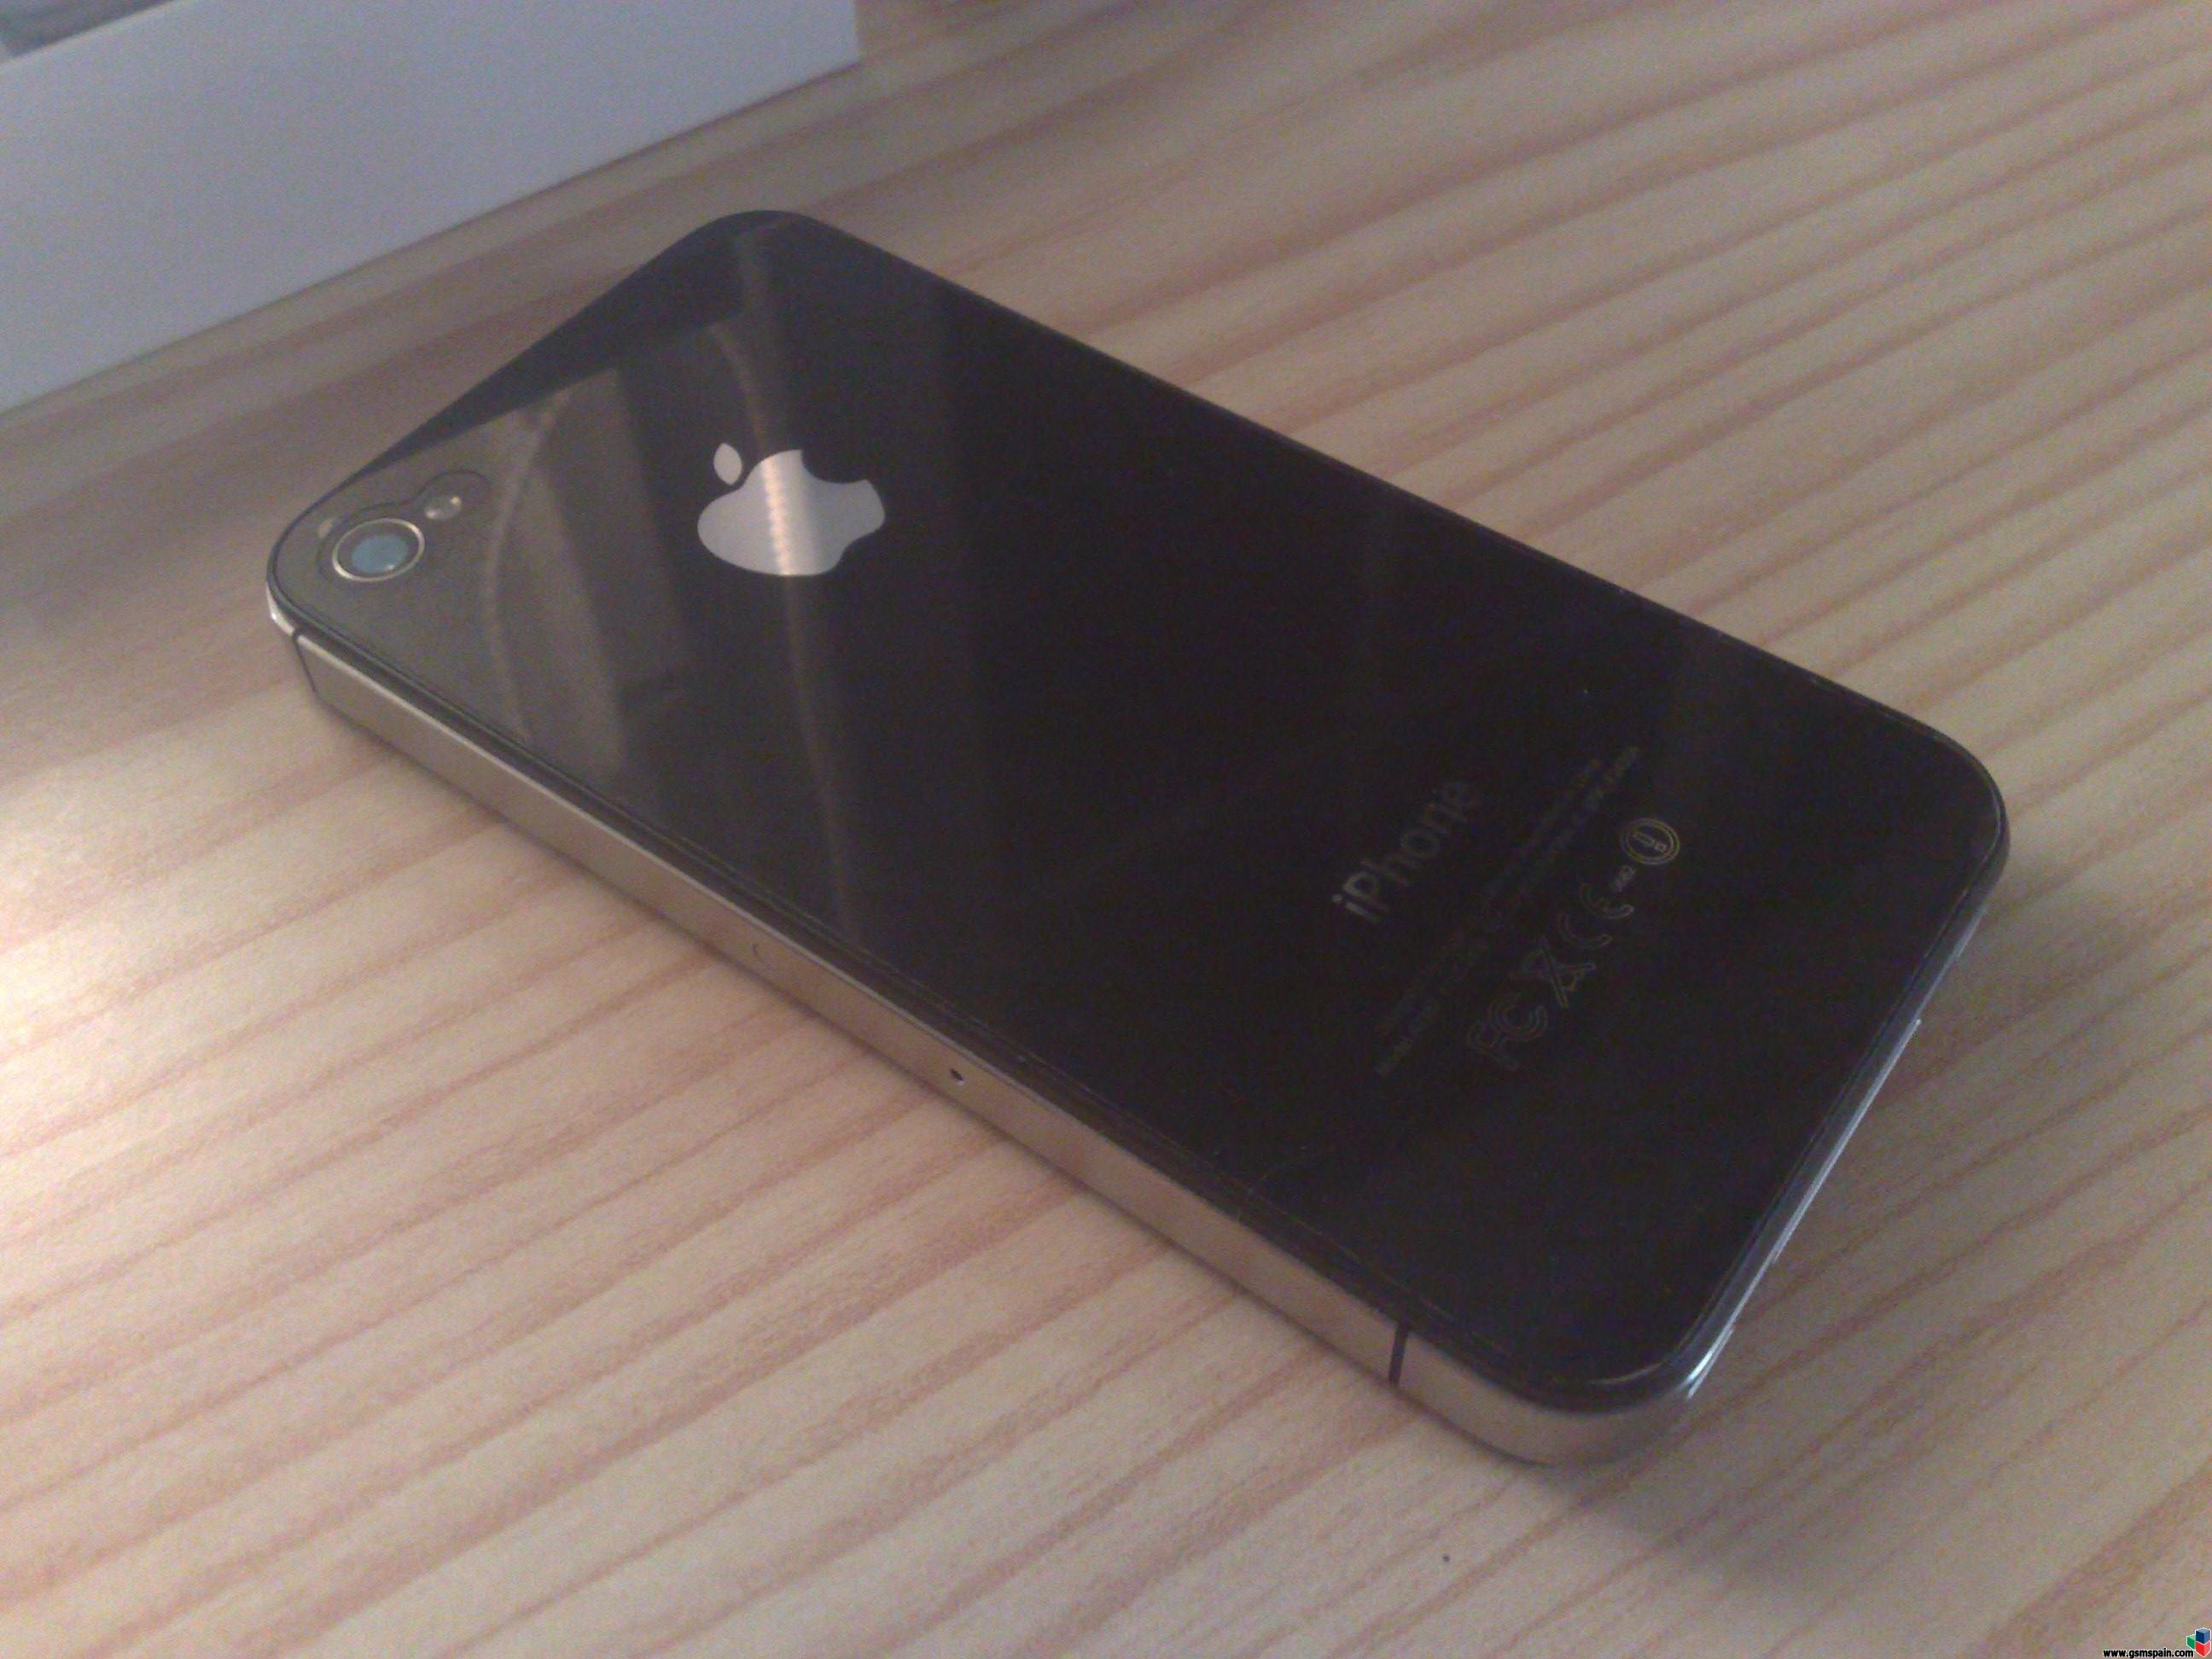 [VENDO] iPhone 4s 16GB negro, libre